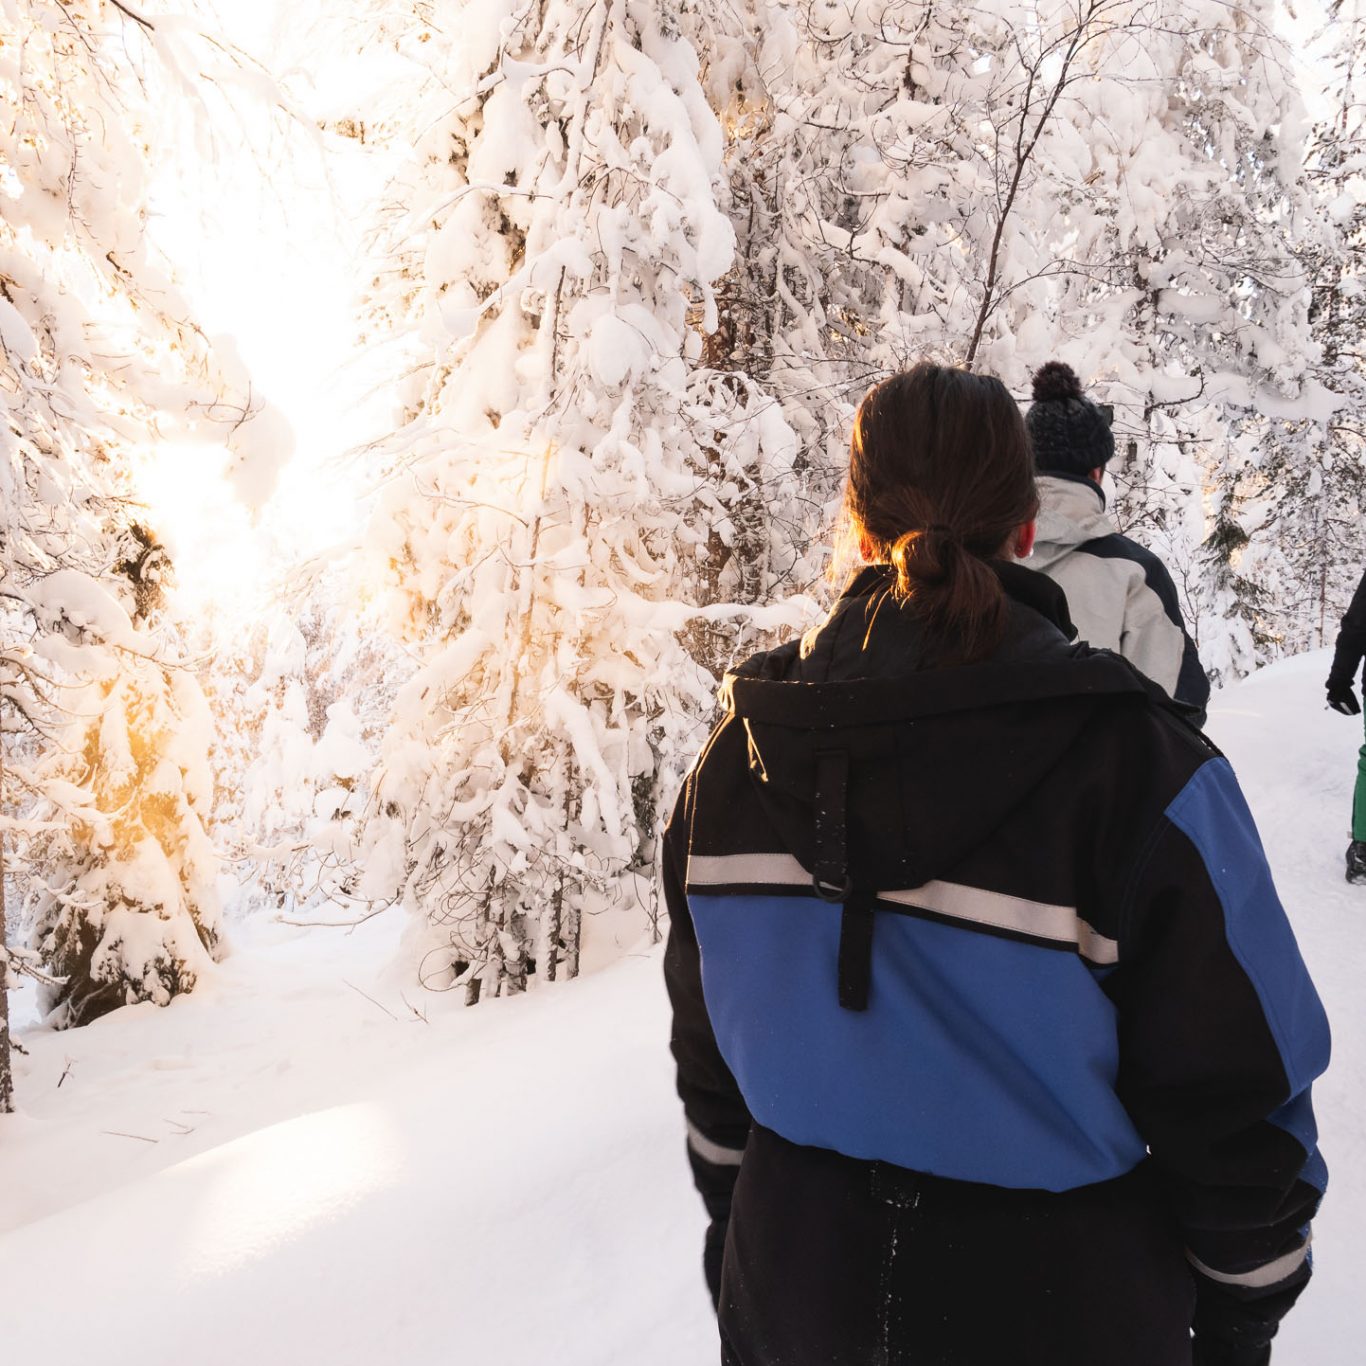 Activities / Easy snowshoeing in wilderness – Levi, Wild Nordic Finland @wildnordicfinland